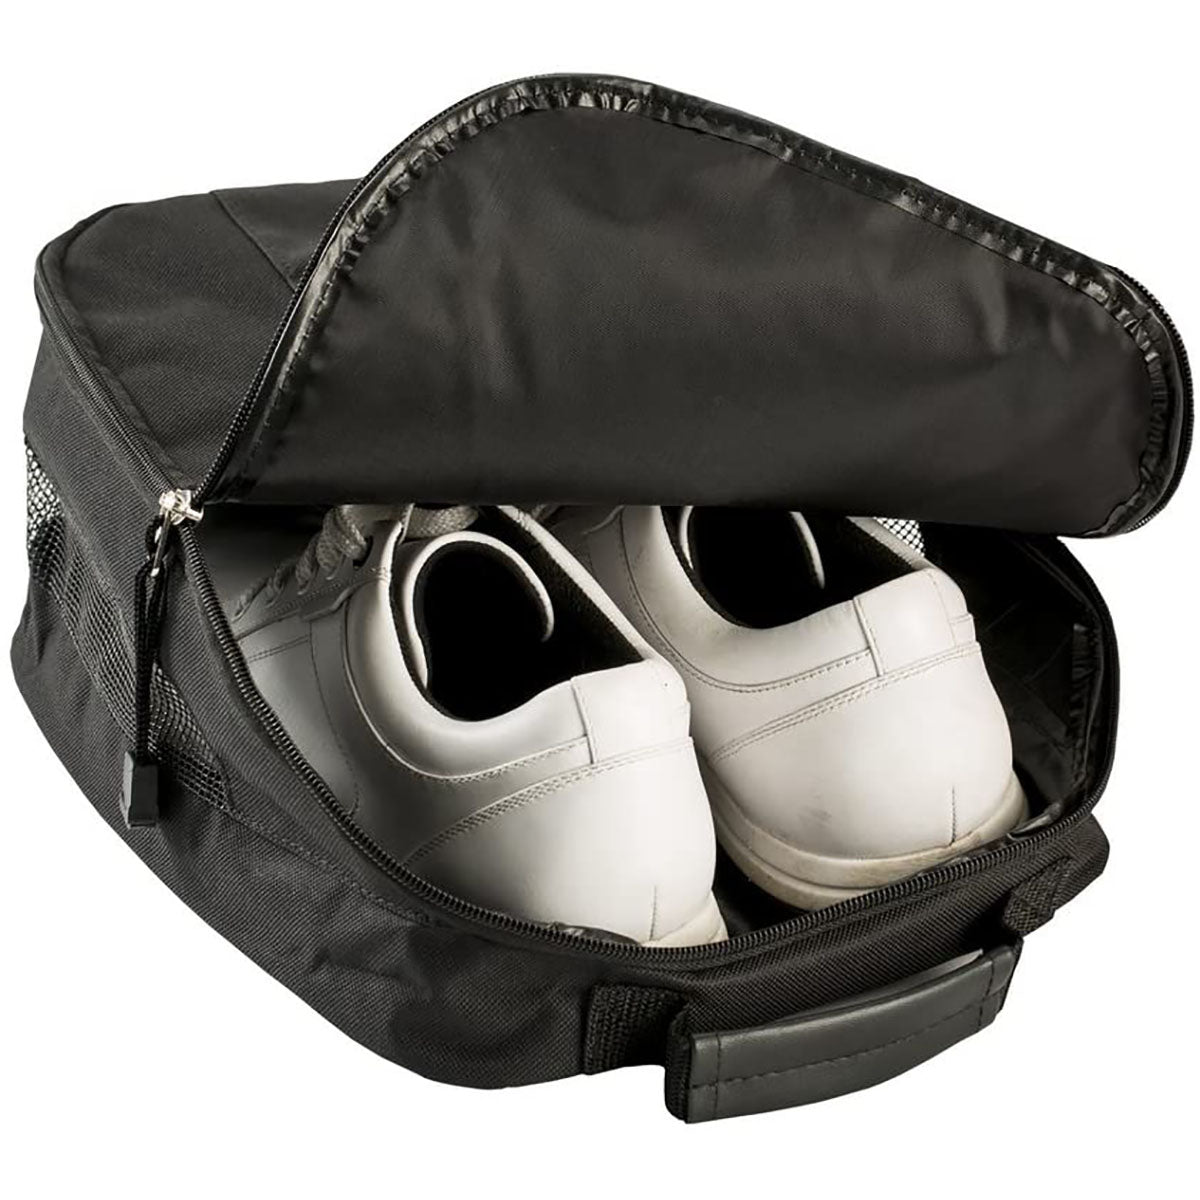 IZZO Golf Shoe and Accessories Storage Bag - Black IZZO Golf